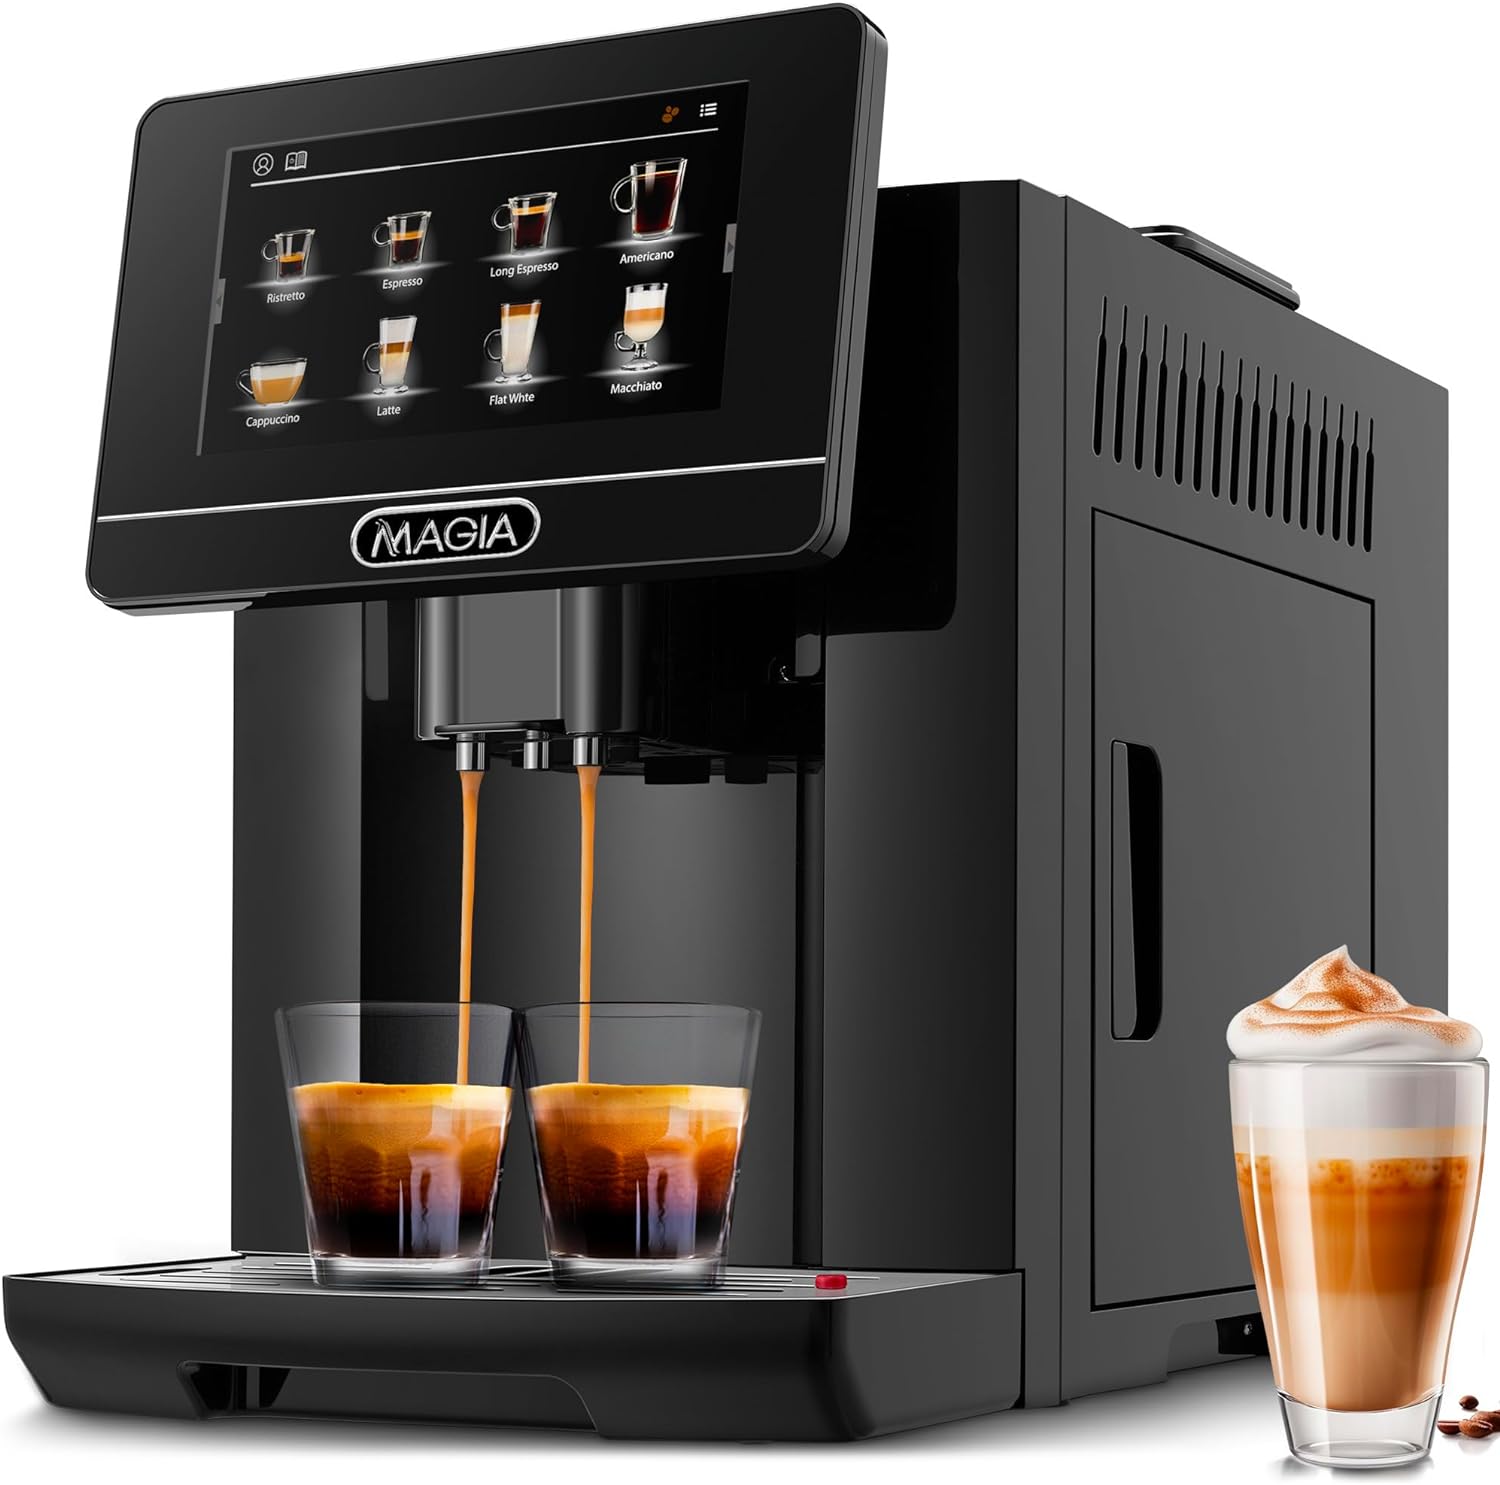 Zstar Espresso Machine with Milk Frother and Grinder